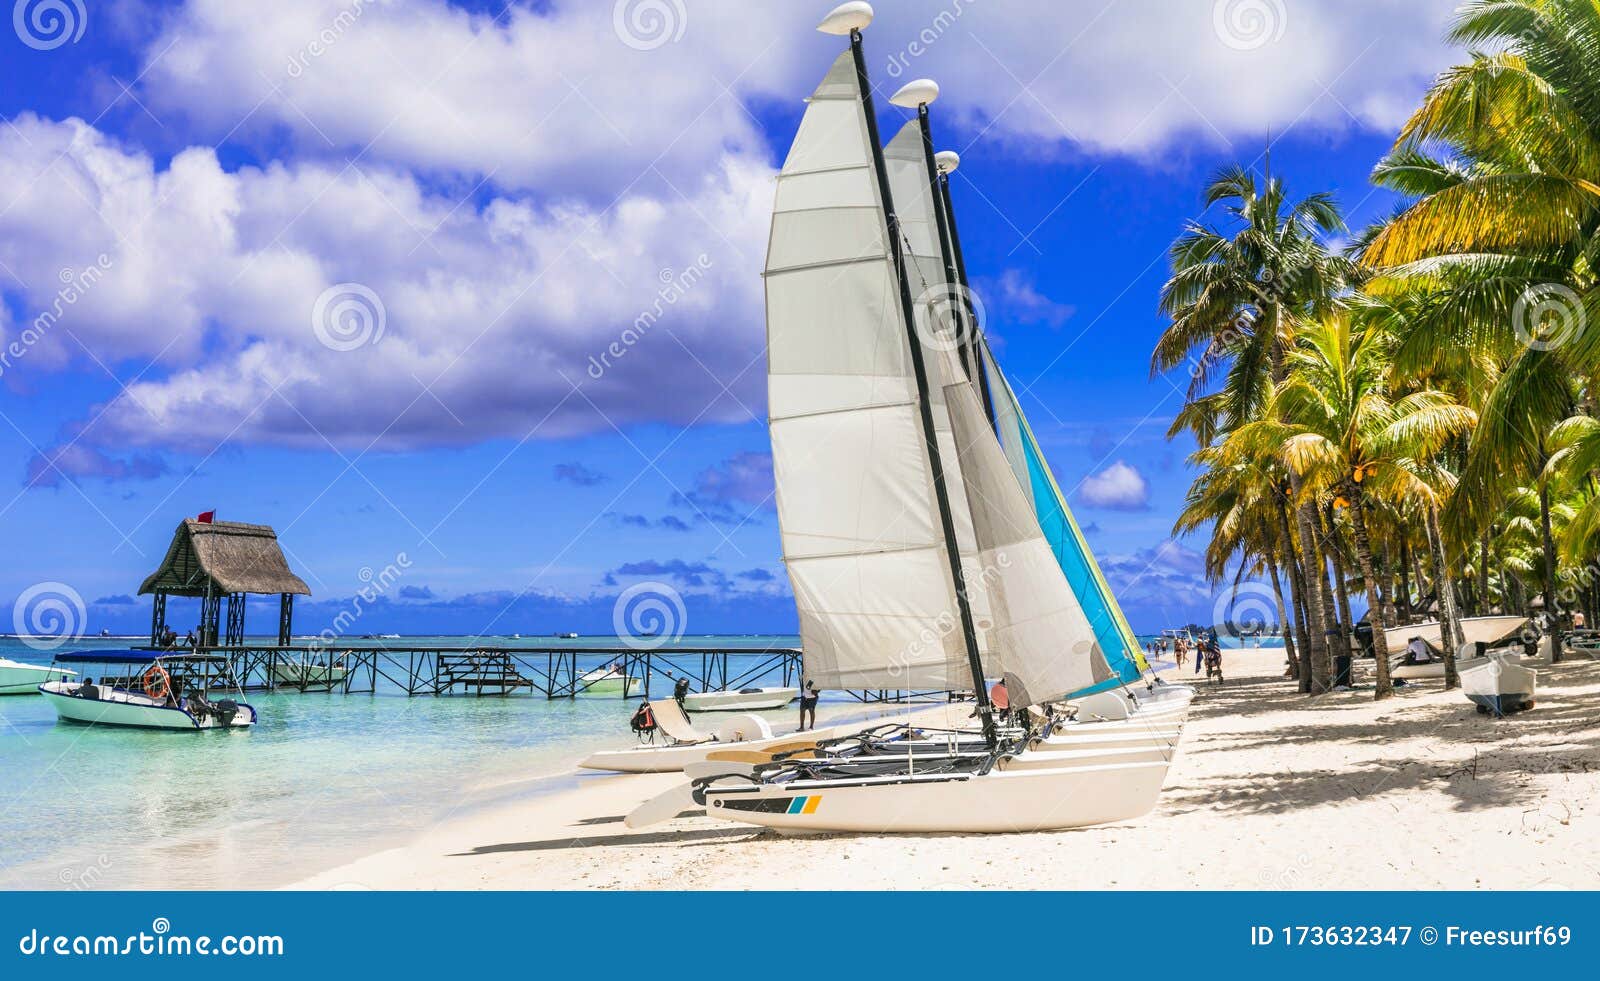 water sport activities in beautiful tropical beach trou aux biches in mauritius island